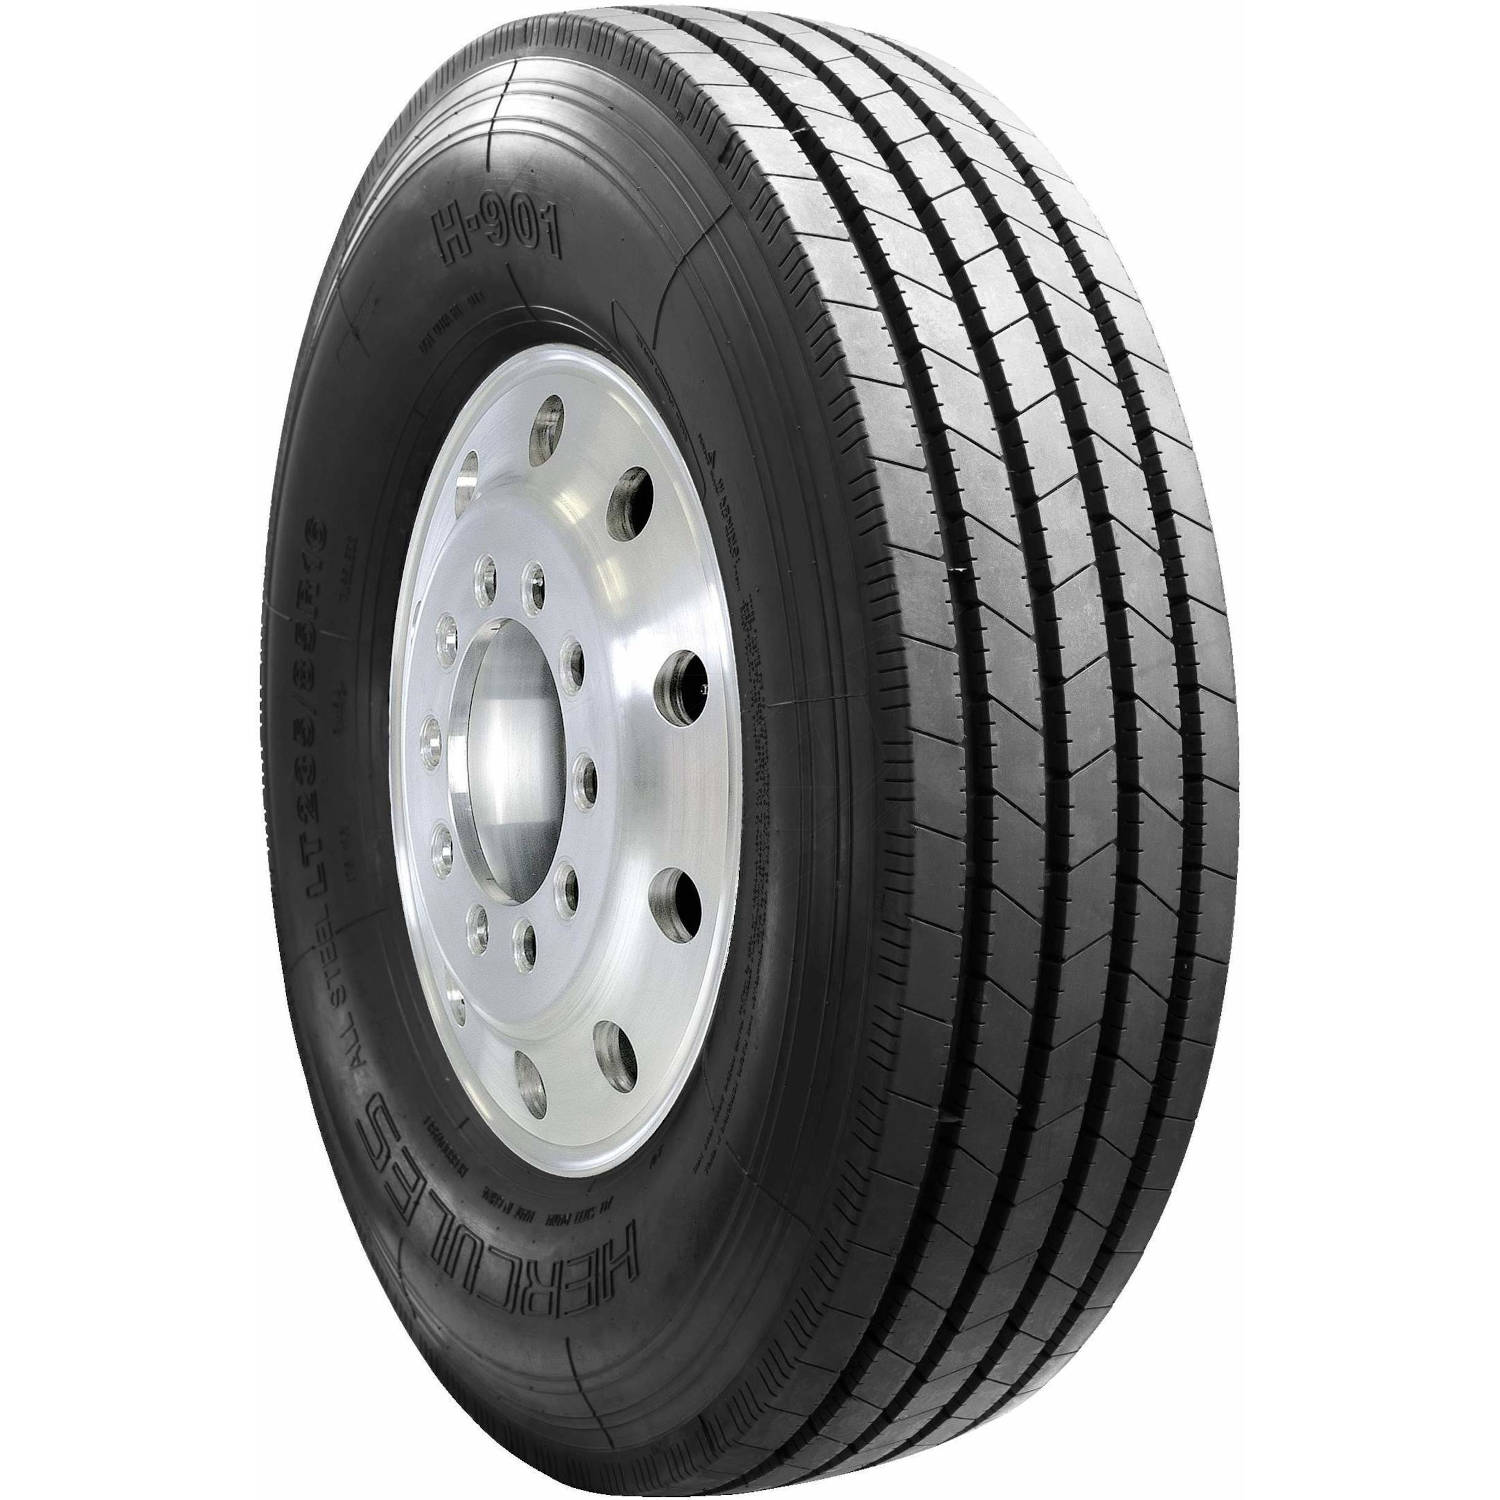 HERCULES H-901 LT245/75R16 (30.5X9.7R 16) Tires